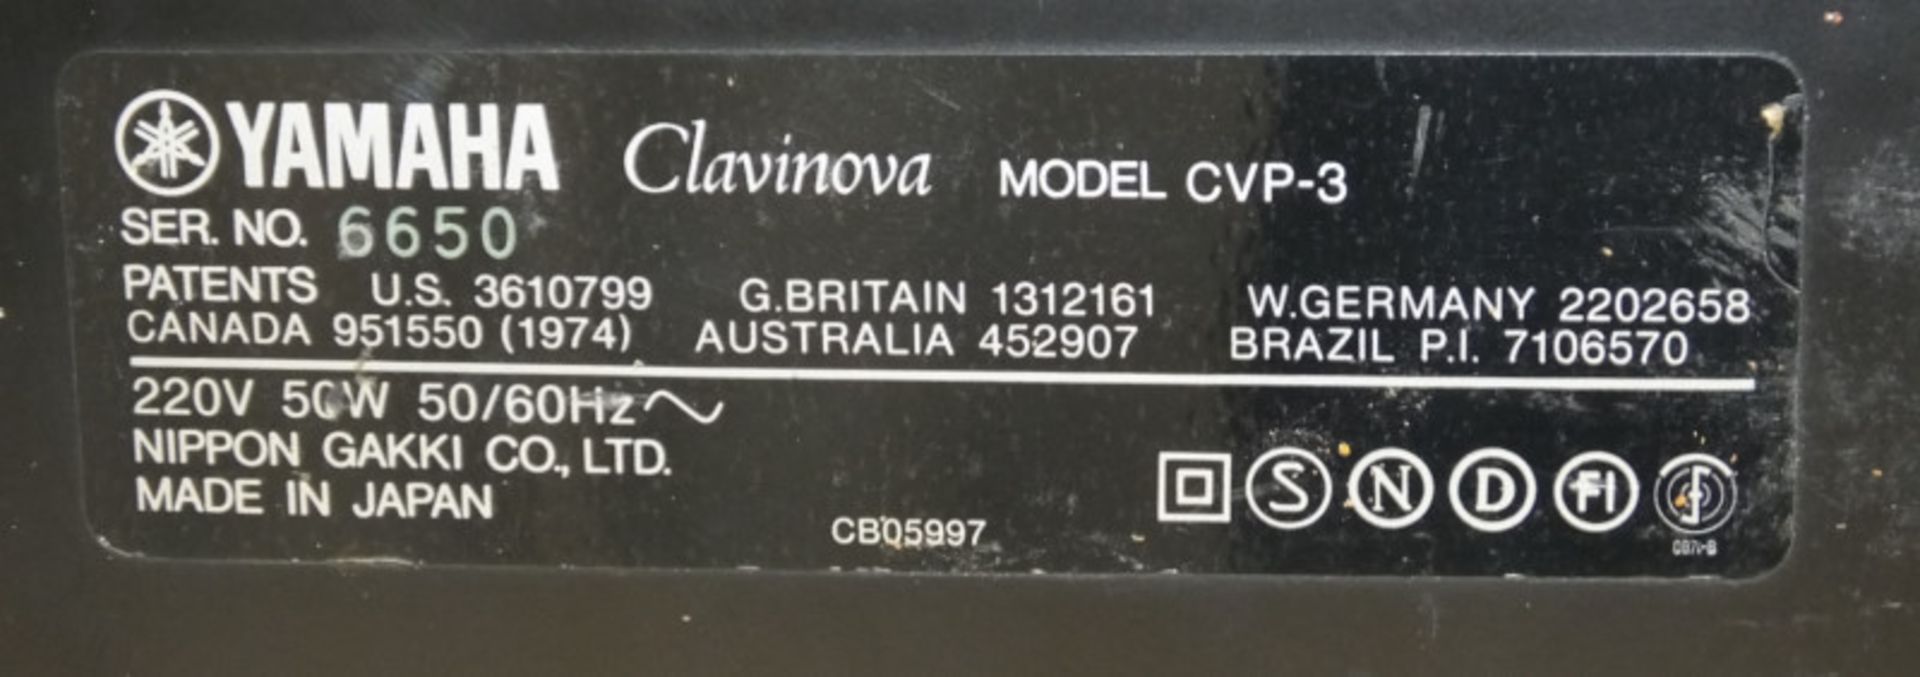 Yamaha CVP-3 Clavinova in flight case (2-pin plug) - Image 7 of 8